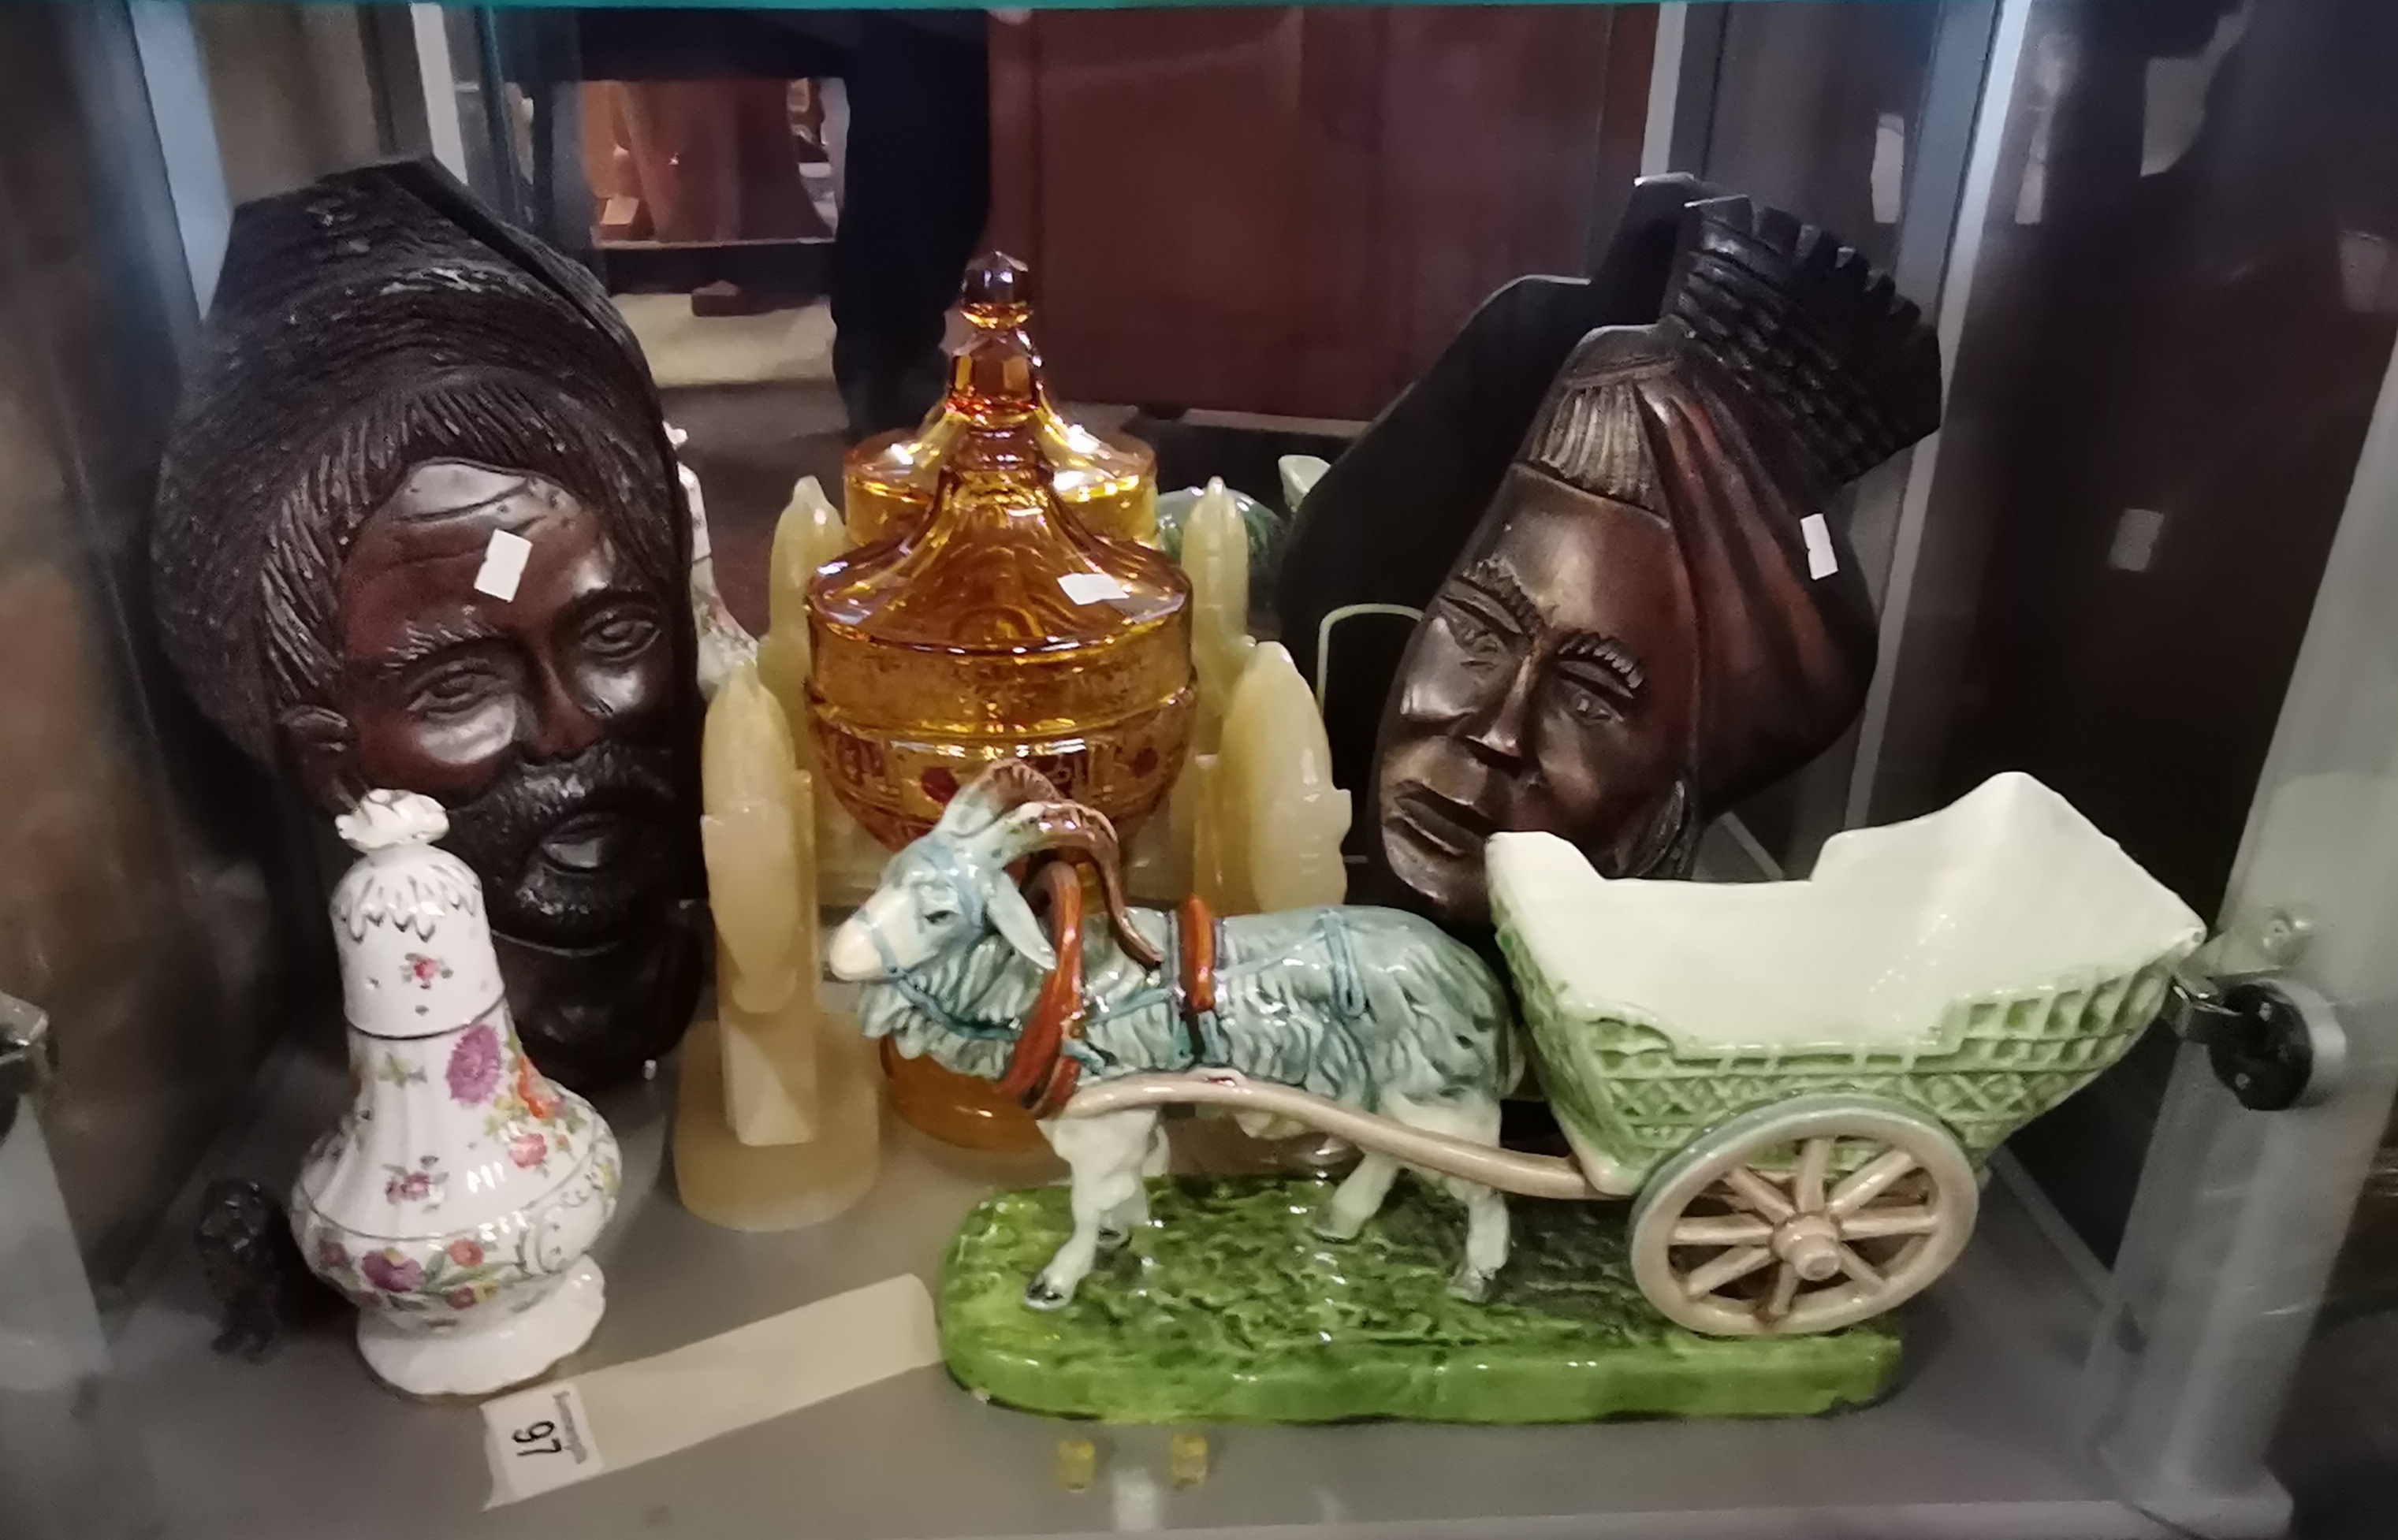 Amber glass Bon bon jar, Goat and cart figurine, plus others